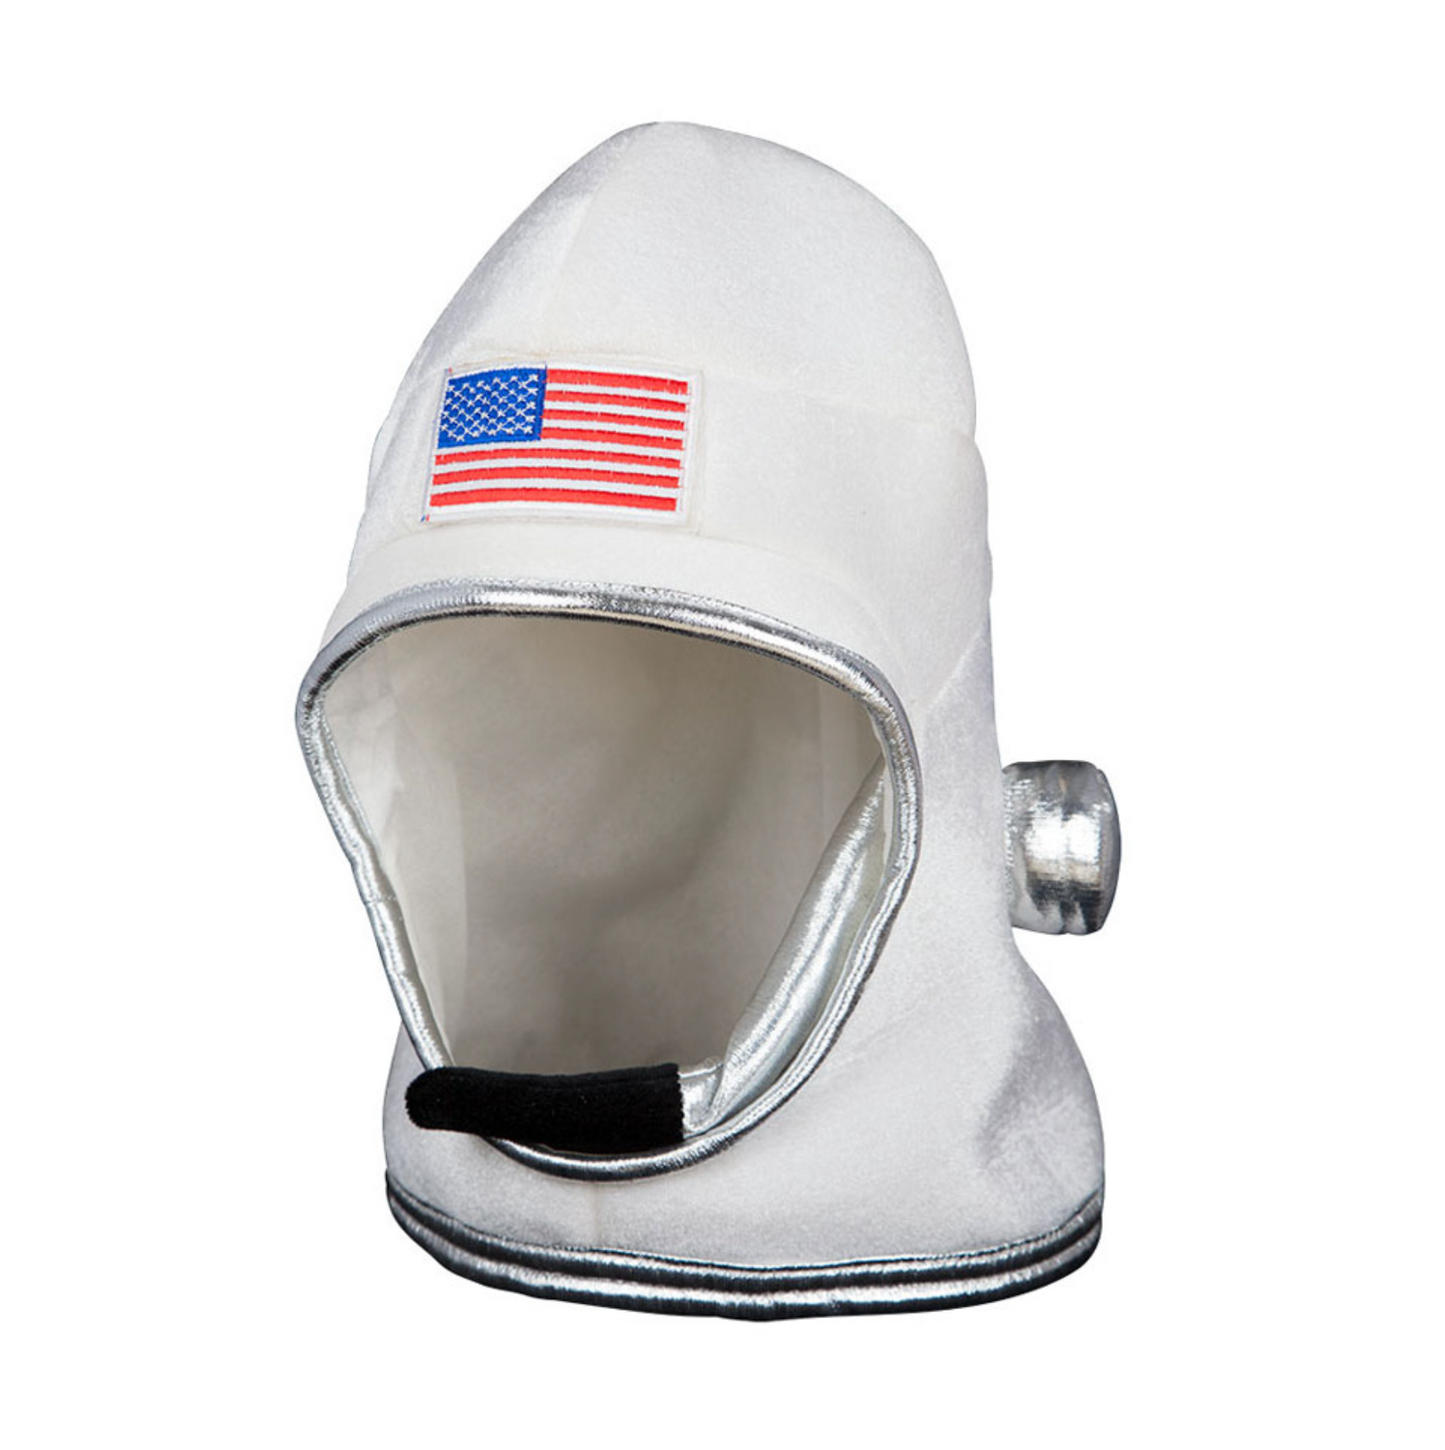 Astronaut helmet with microphone